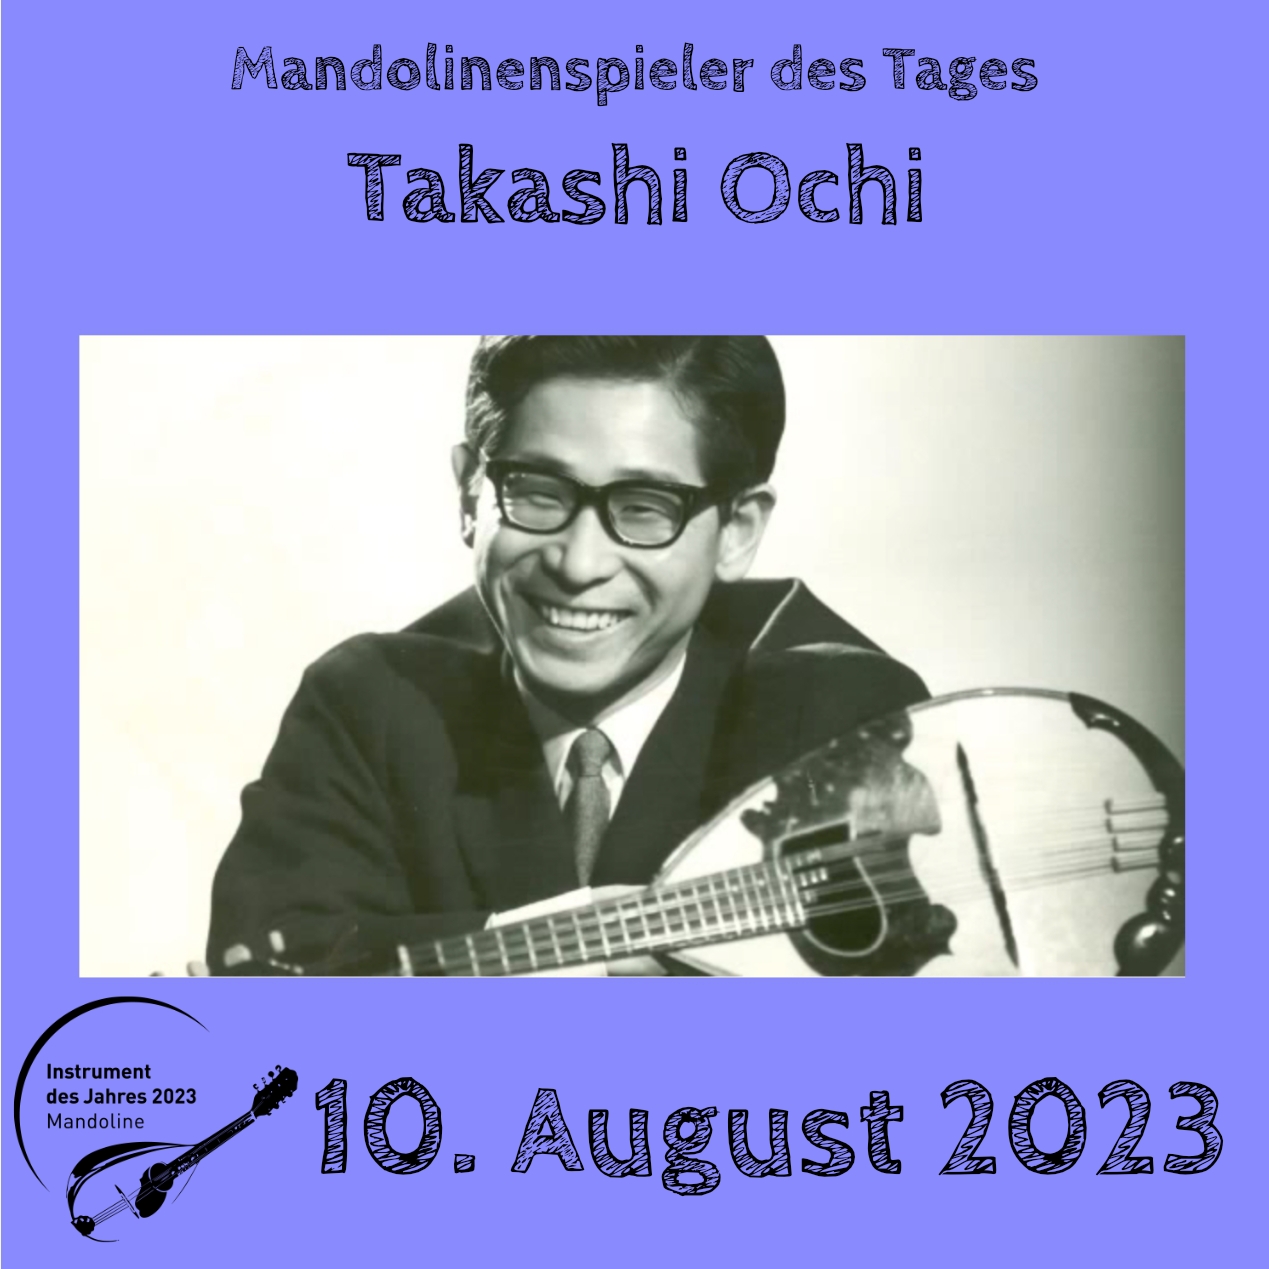 10. August  - Takashi Ochi Mandoline Instrument des Jahres 2023 Mandolinenspieler Mandolinenspielerin des Tages